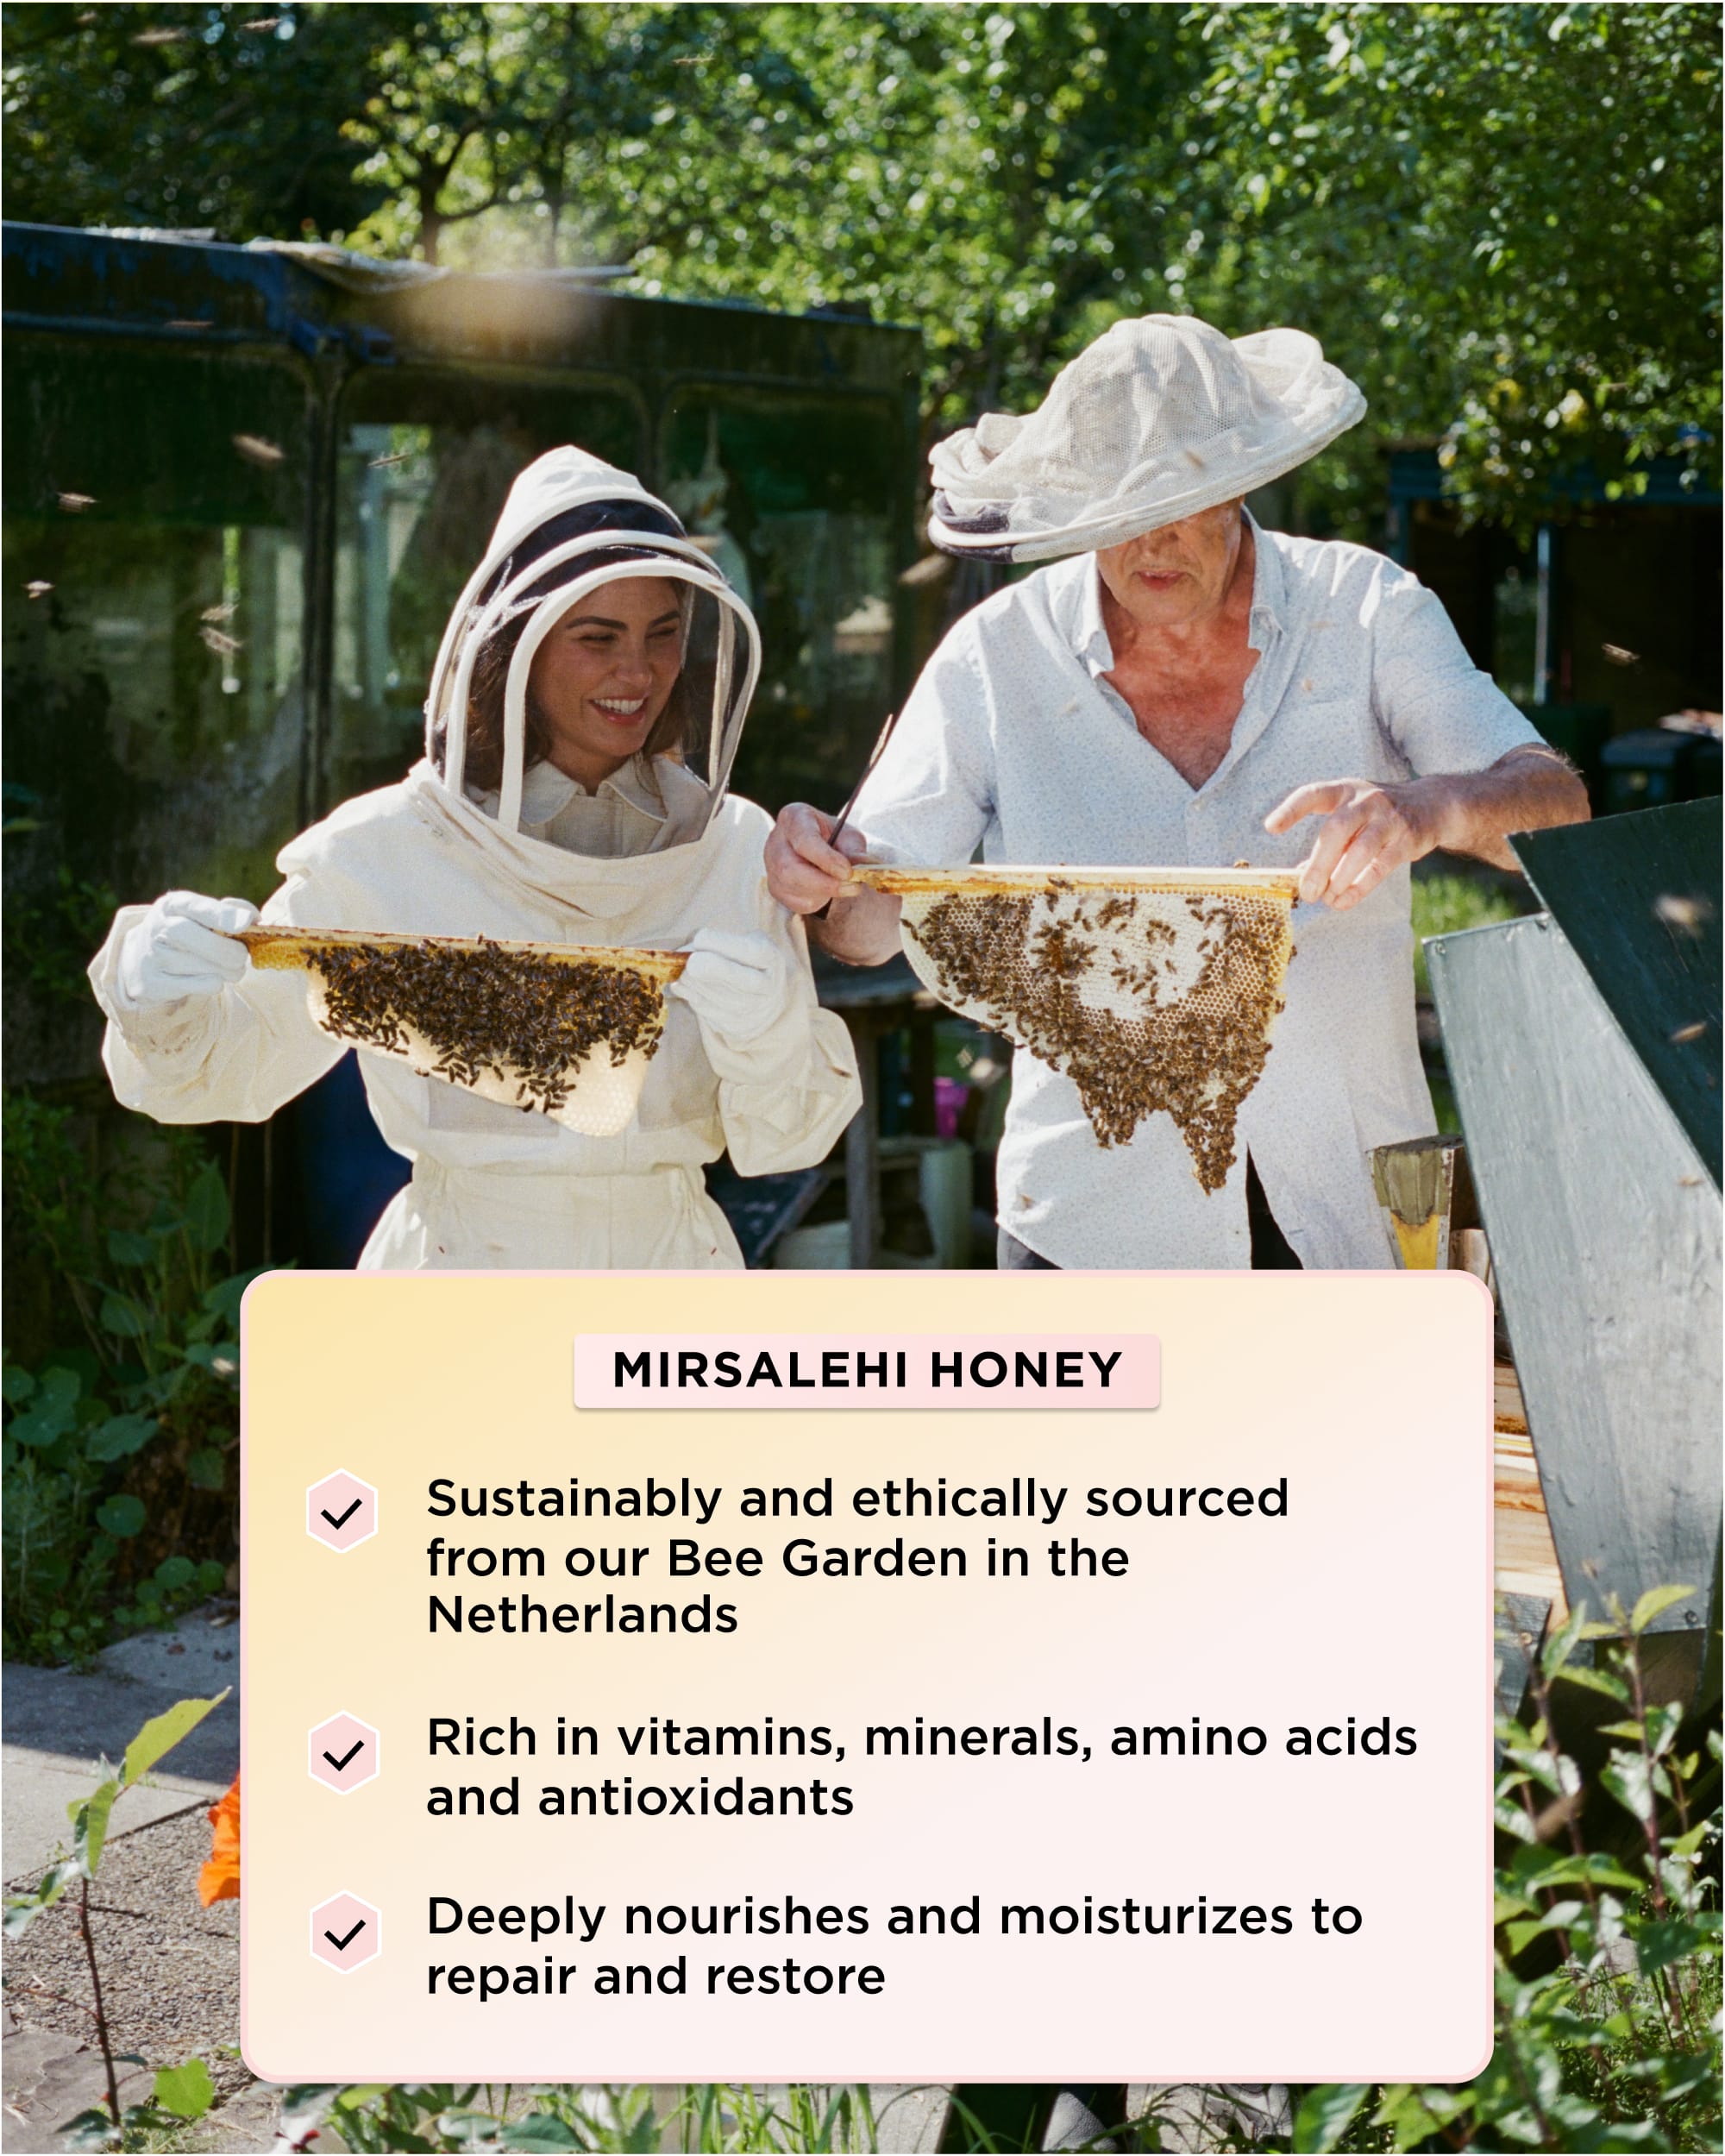 Antioxidant Body Oil - Eczema Honey